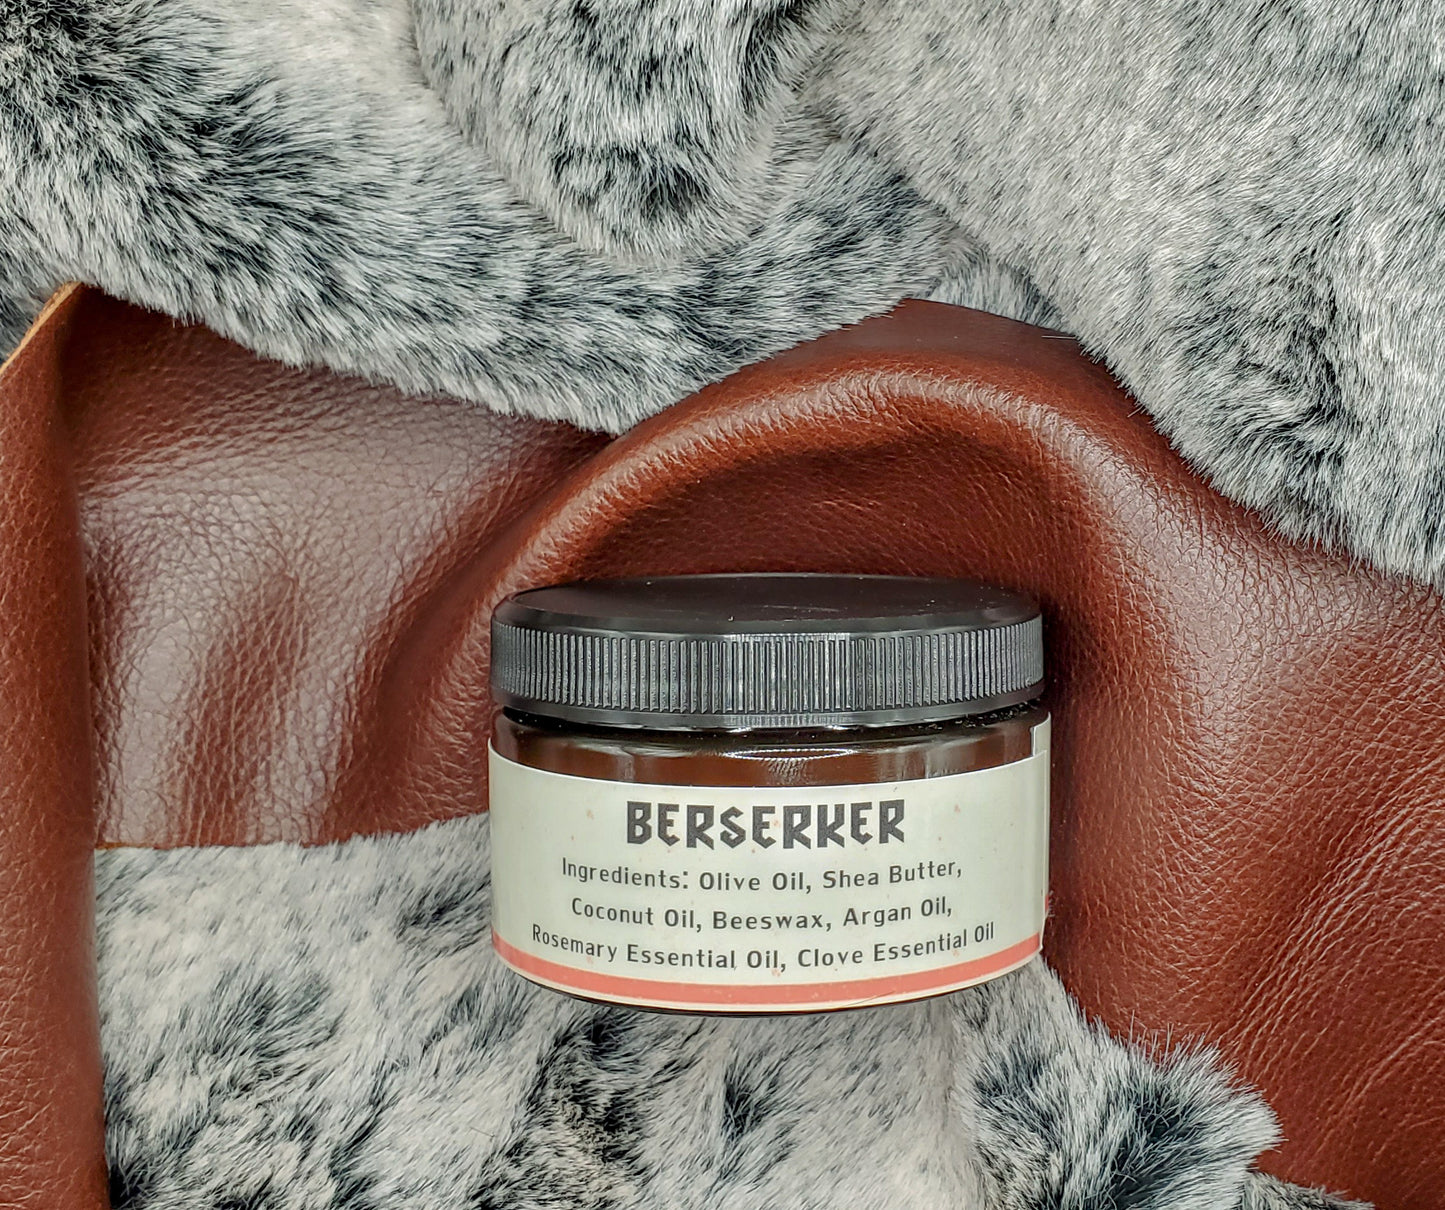 Berserker Beard Grooming Set // Beard Oil Beard Balm Beard Shampoo // Rosemary and Clove Scented